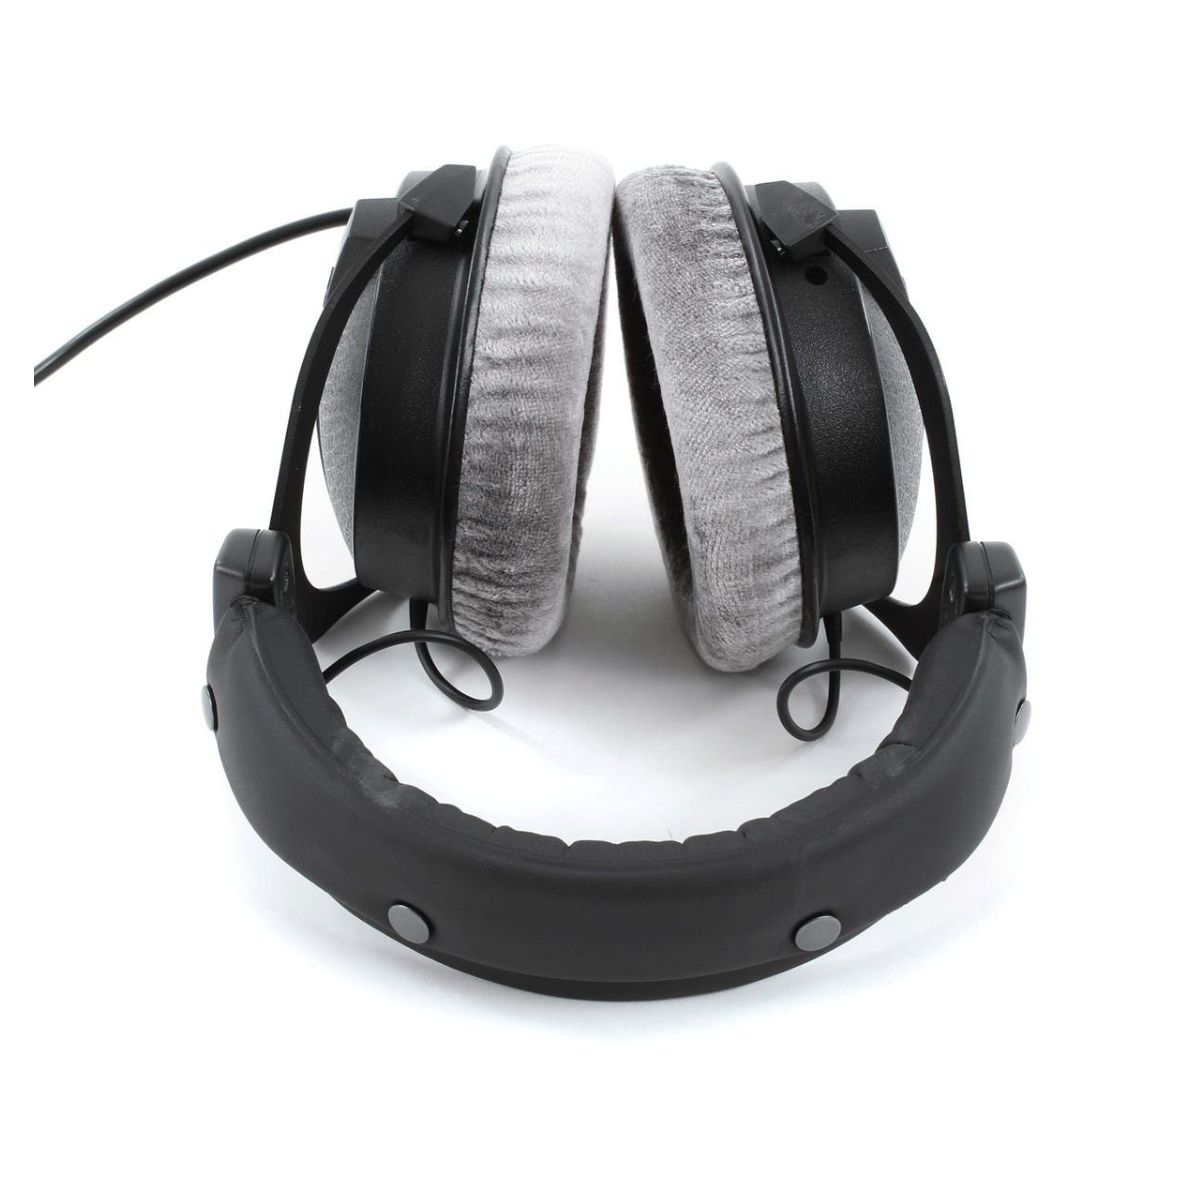 Beyerdynamic DT 770 Pro 80 ohm Closed-back Studio Mixing Headphones